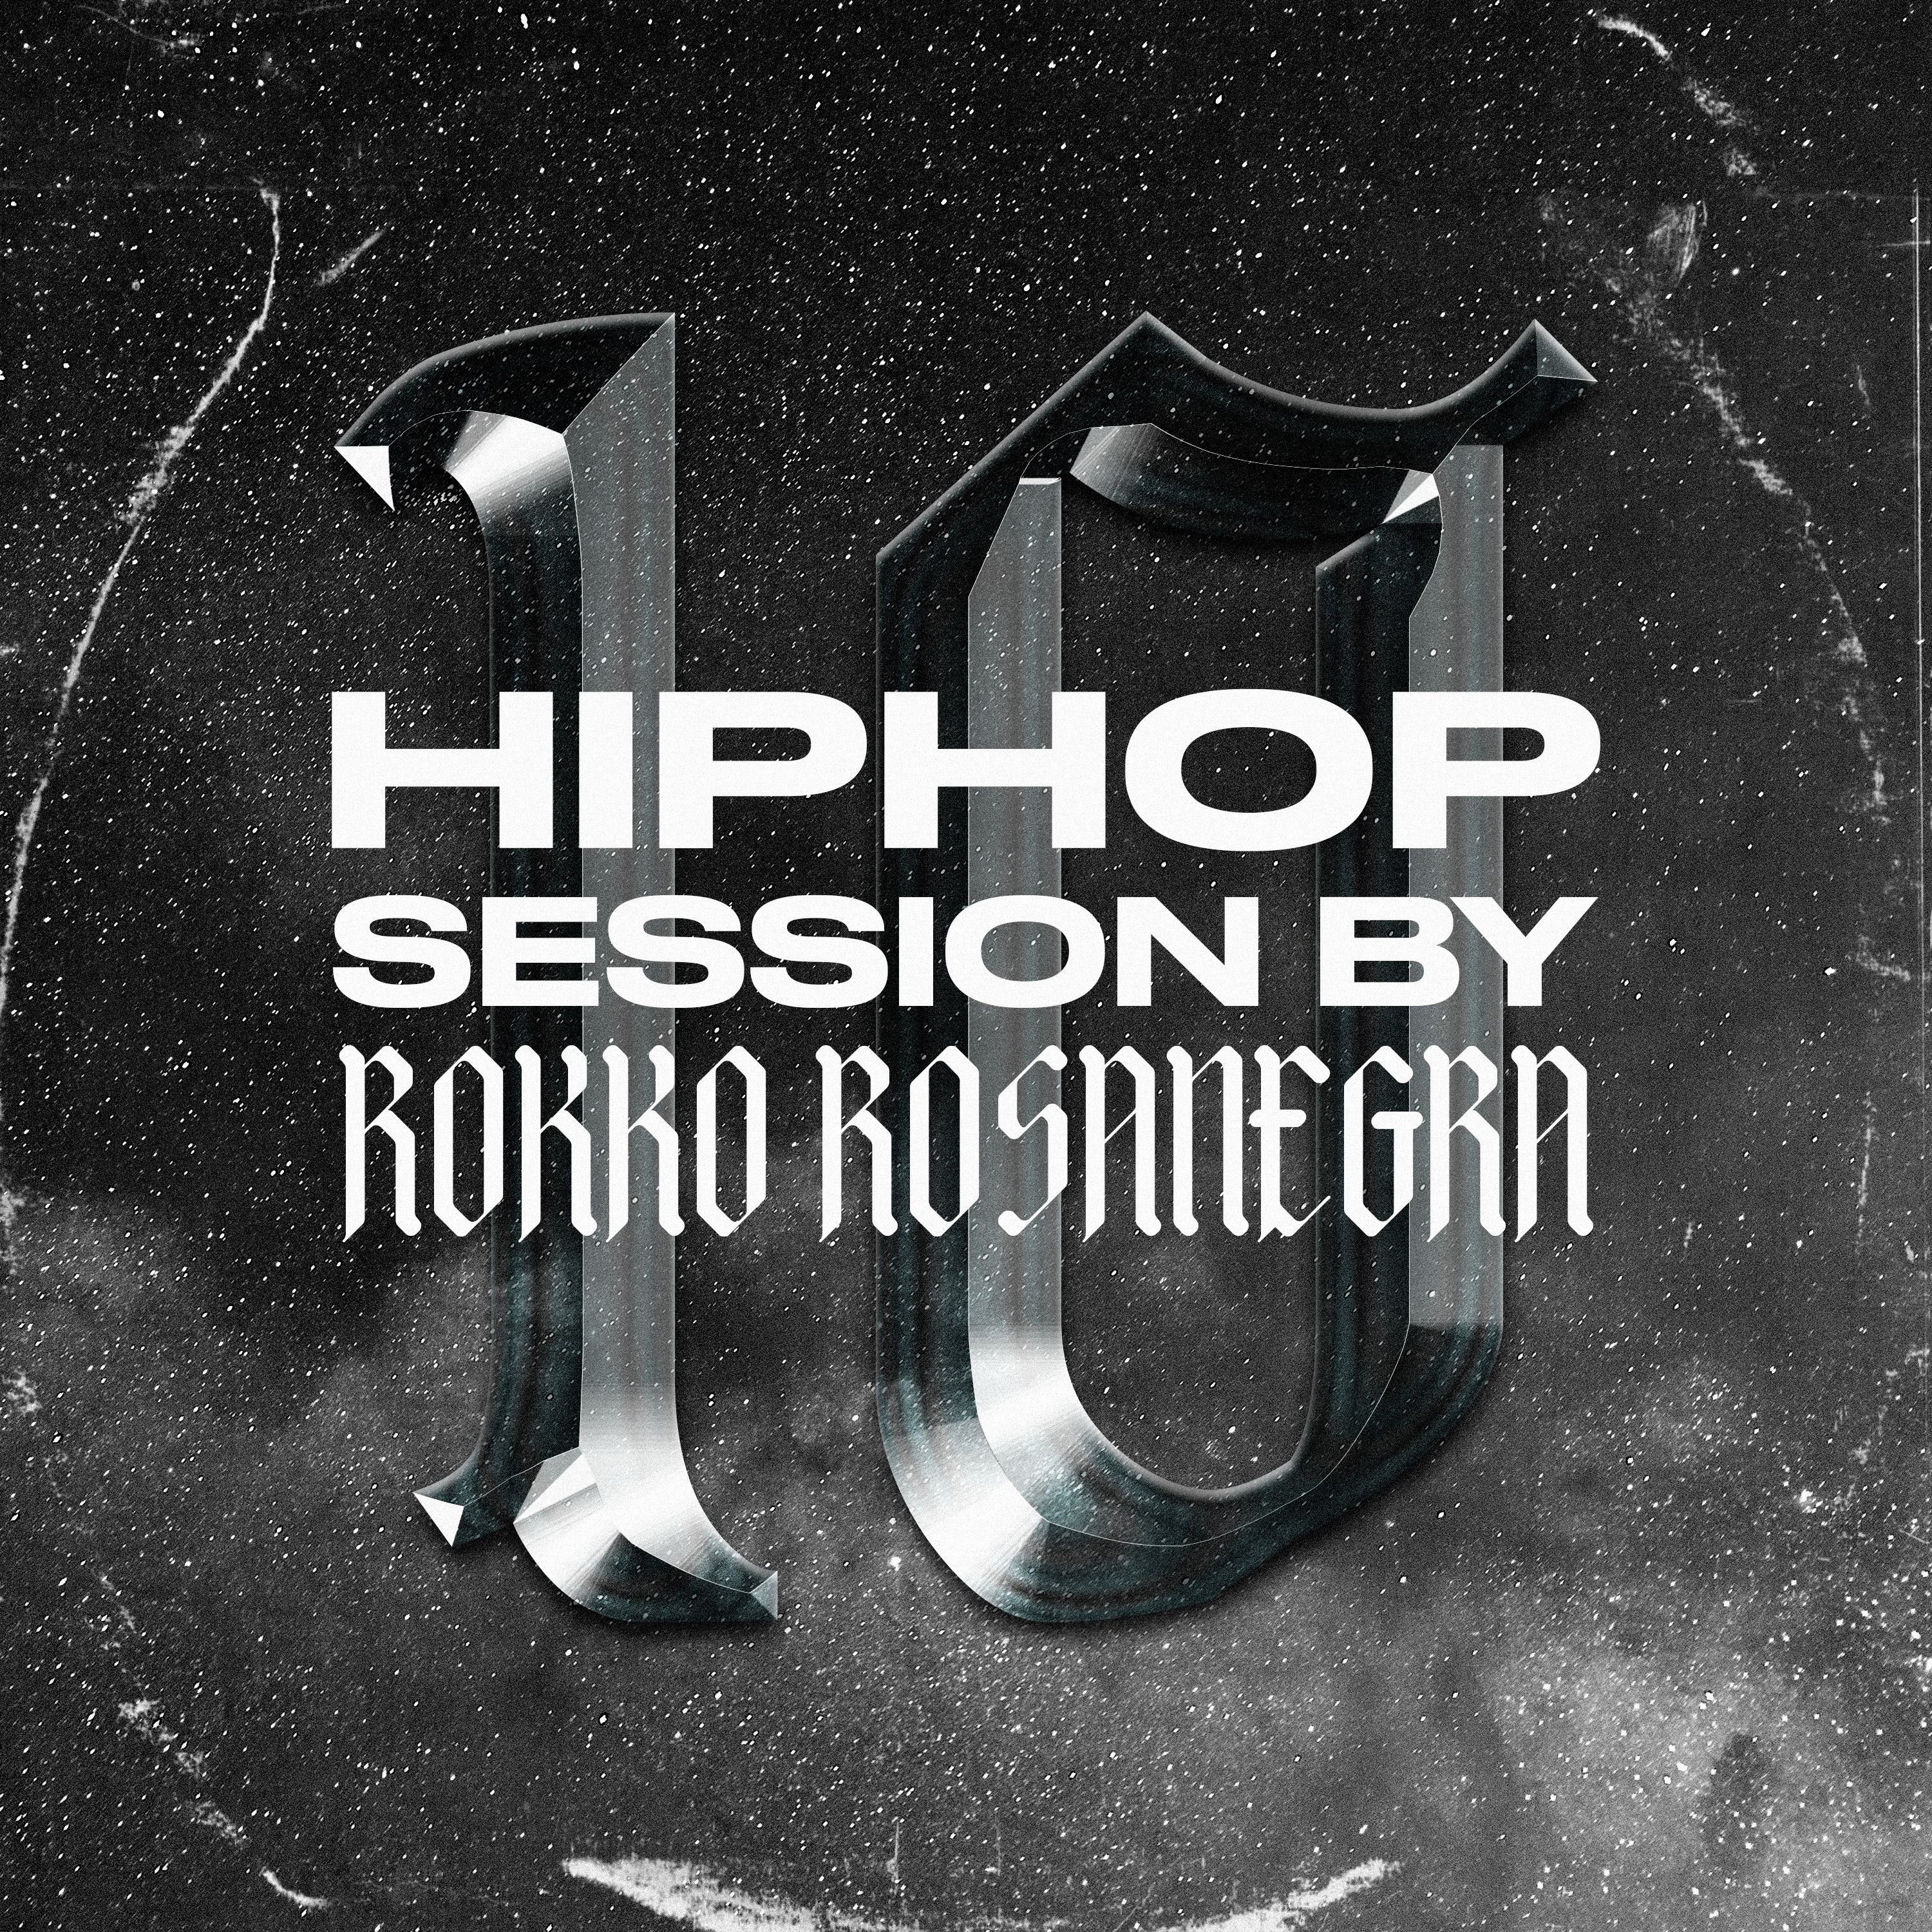 Descarca HIP HOP SESSION 10 (DJ ROKKO ROSANEGRA)